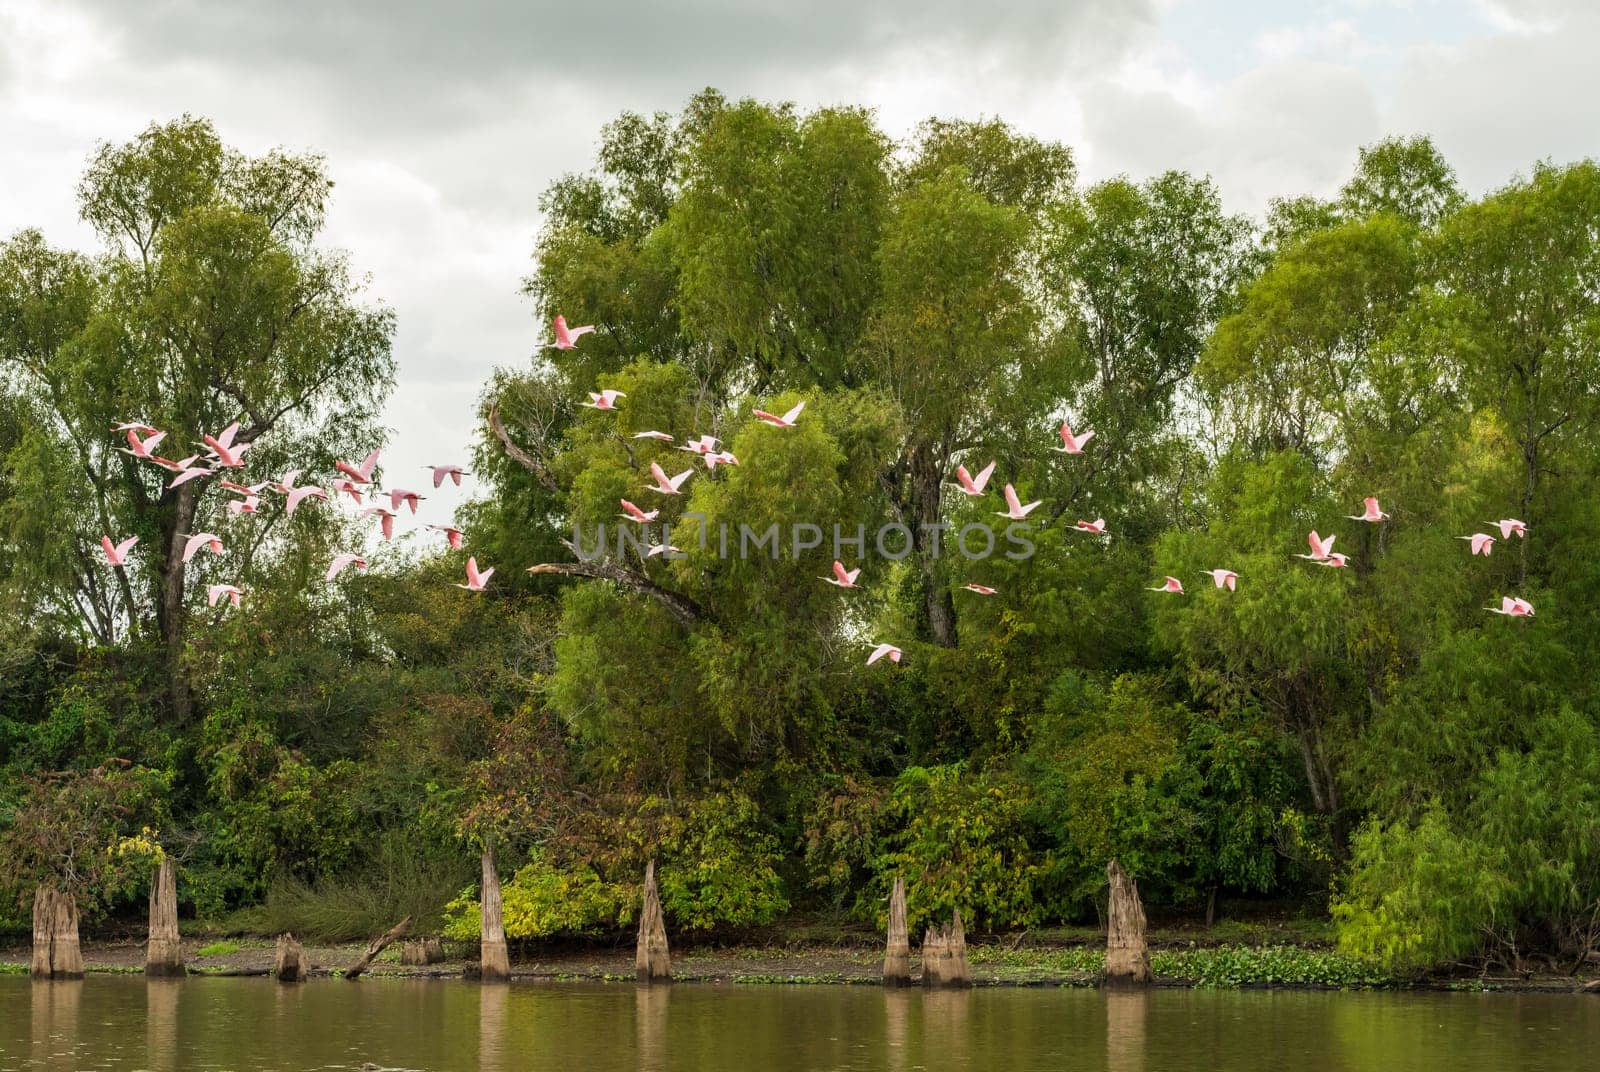 Flock of Roseate spoonbill birds taking flight by trees in Atchafalaya basin by steheap